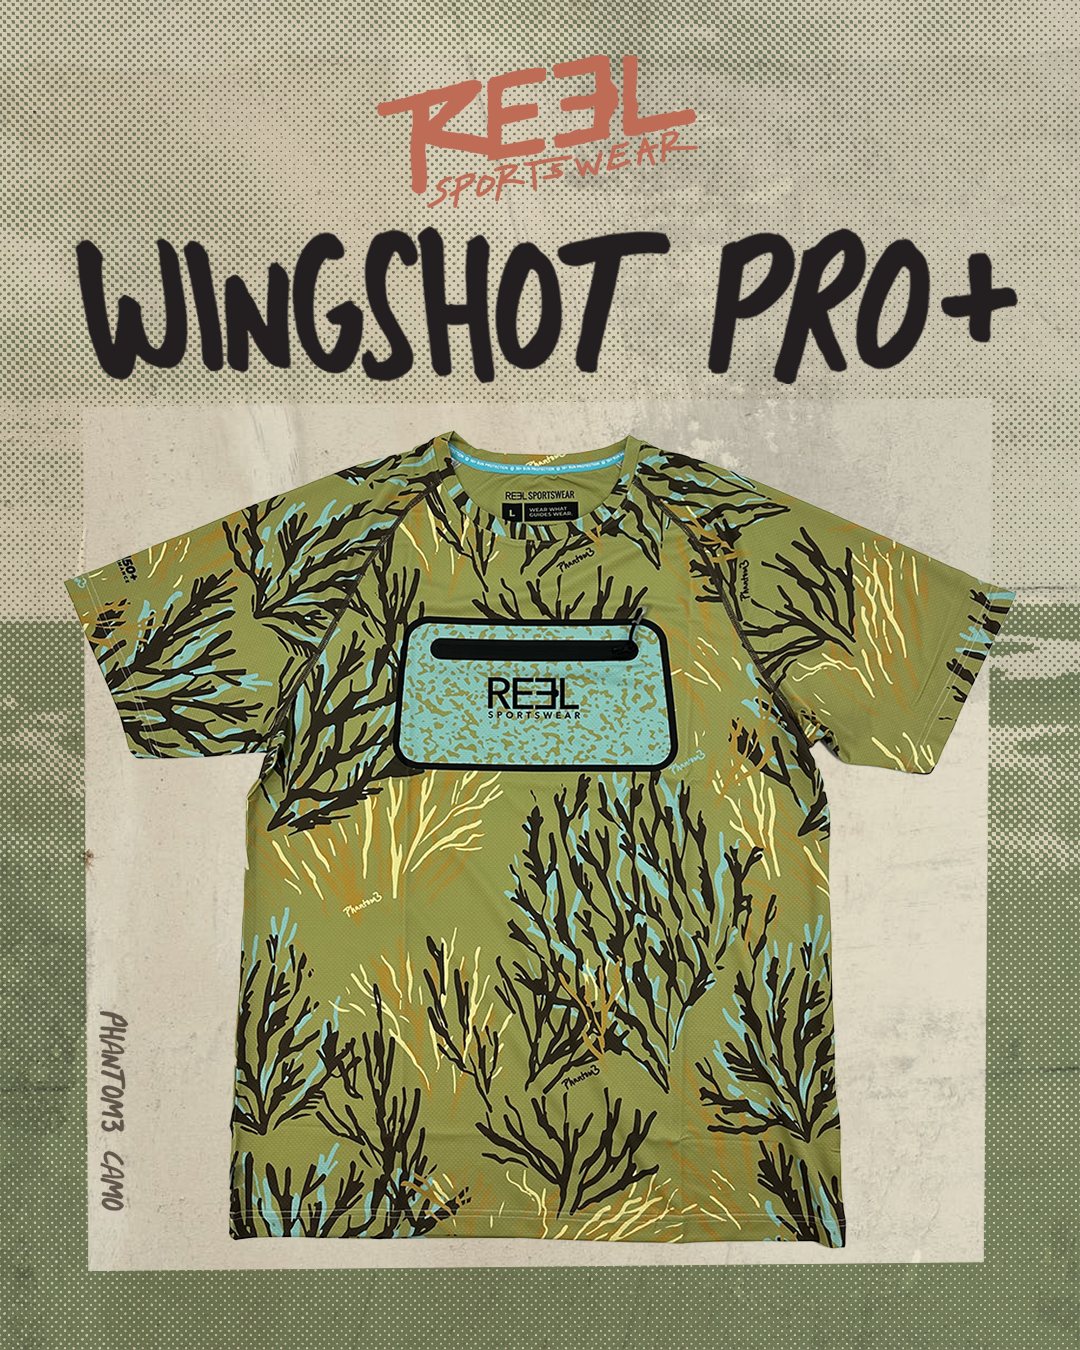 Wingshot Pro+ Camo Short Sleeve Performance Shirt with welded Coretech™ terminal pocket